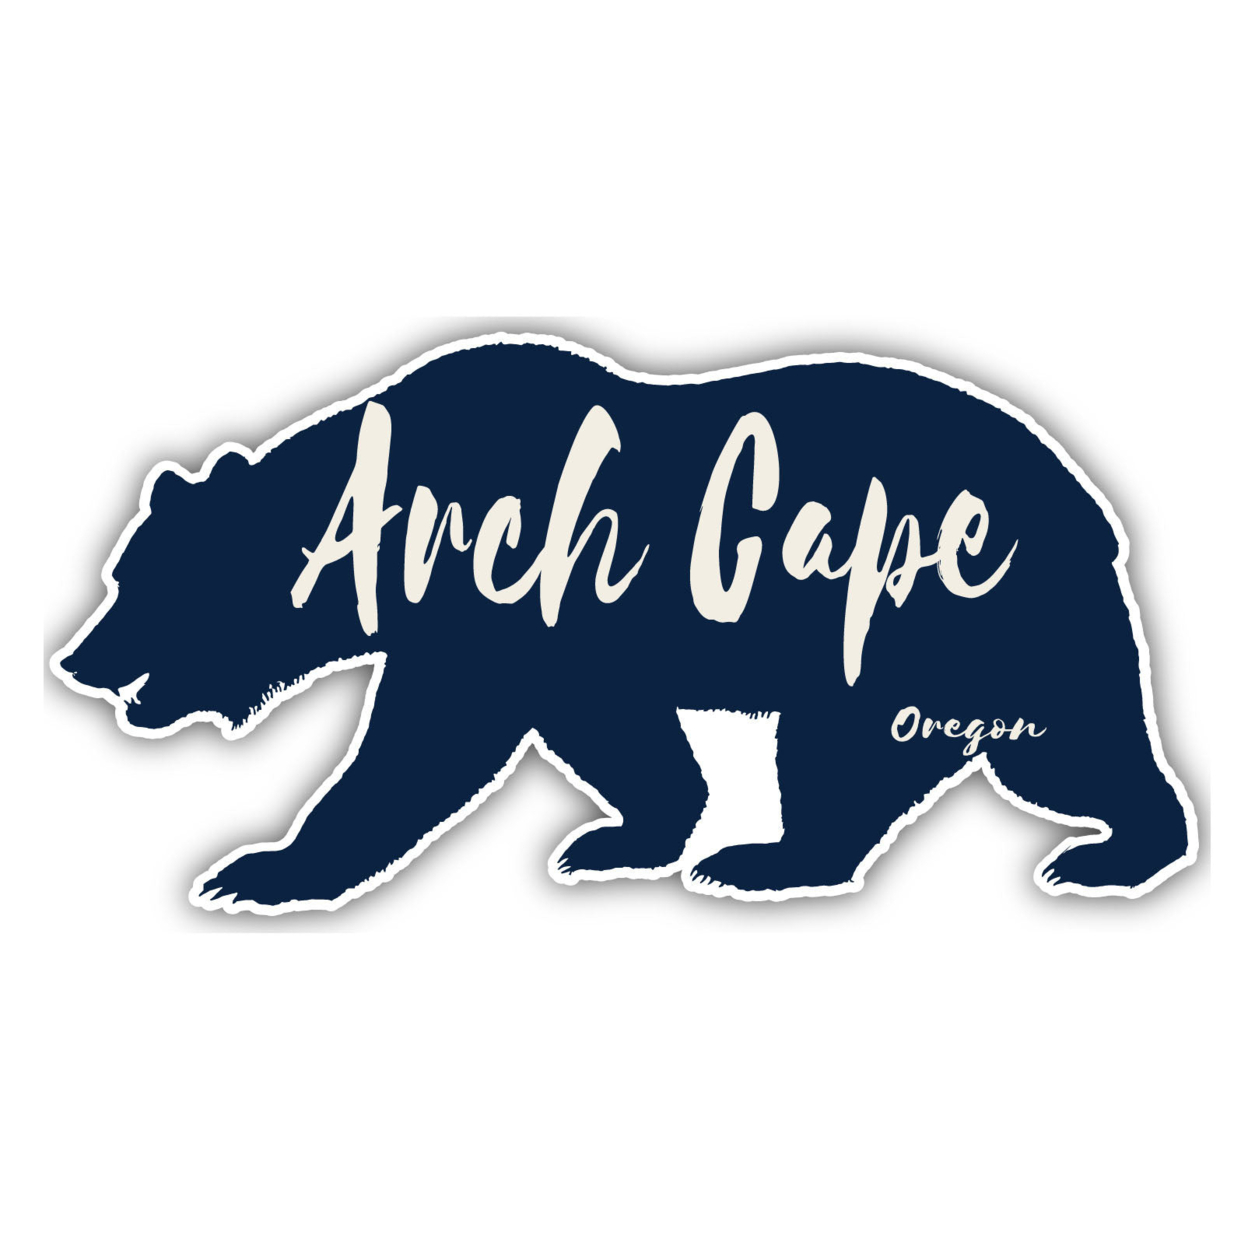 Arch Cape Oregon Souvenir Decorative Stickers (Choose Theme And Size) - Single Unit, 2-Inch, Bear